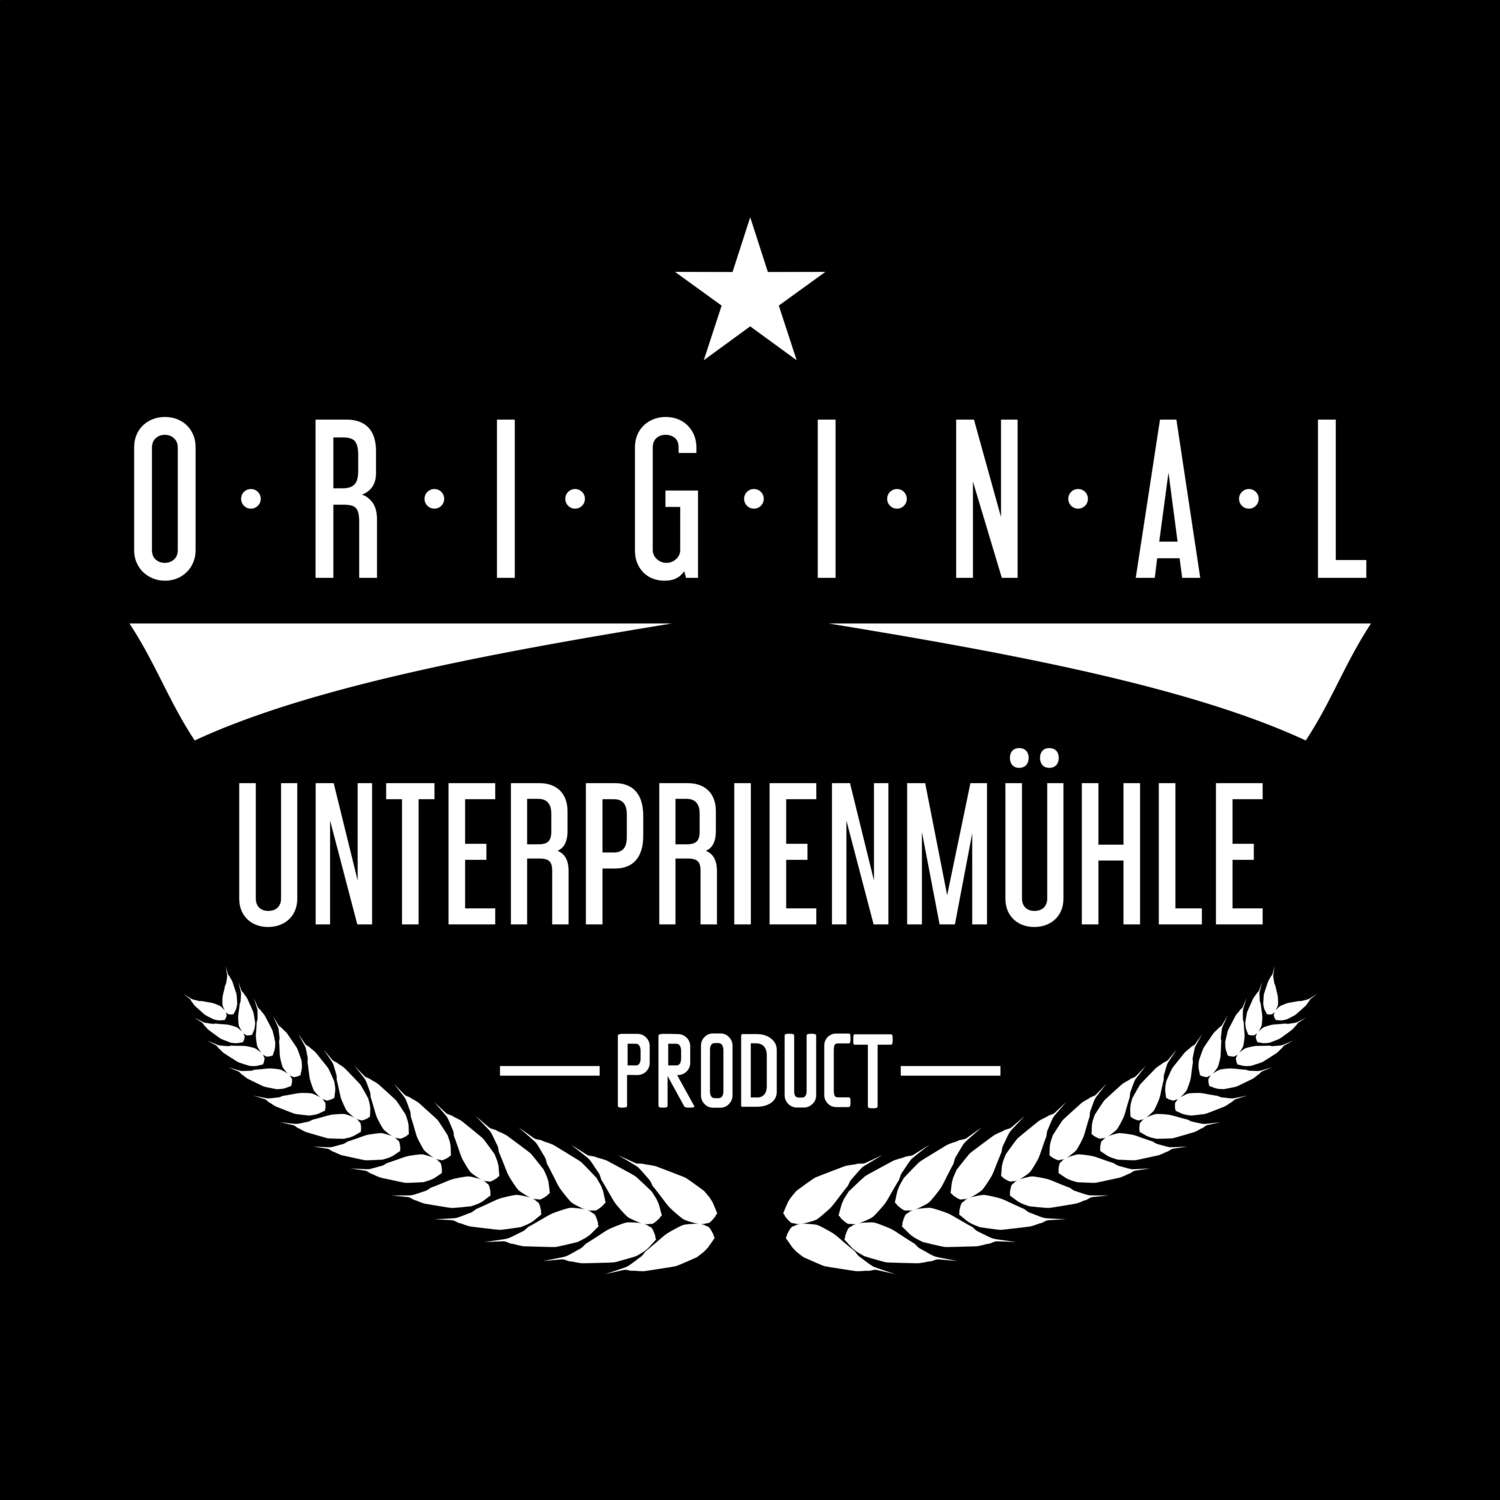 Unterprienmühle T-Shirt »Original Product«